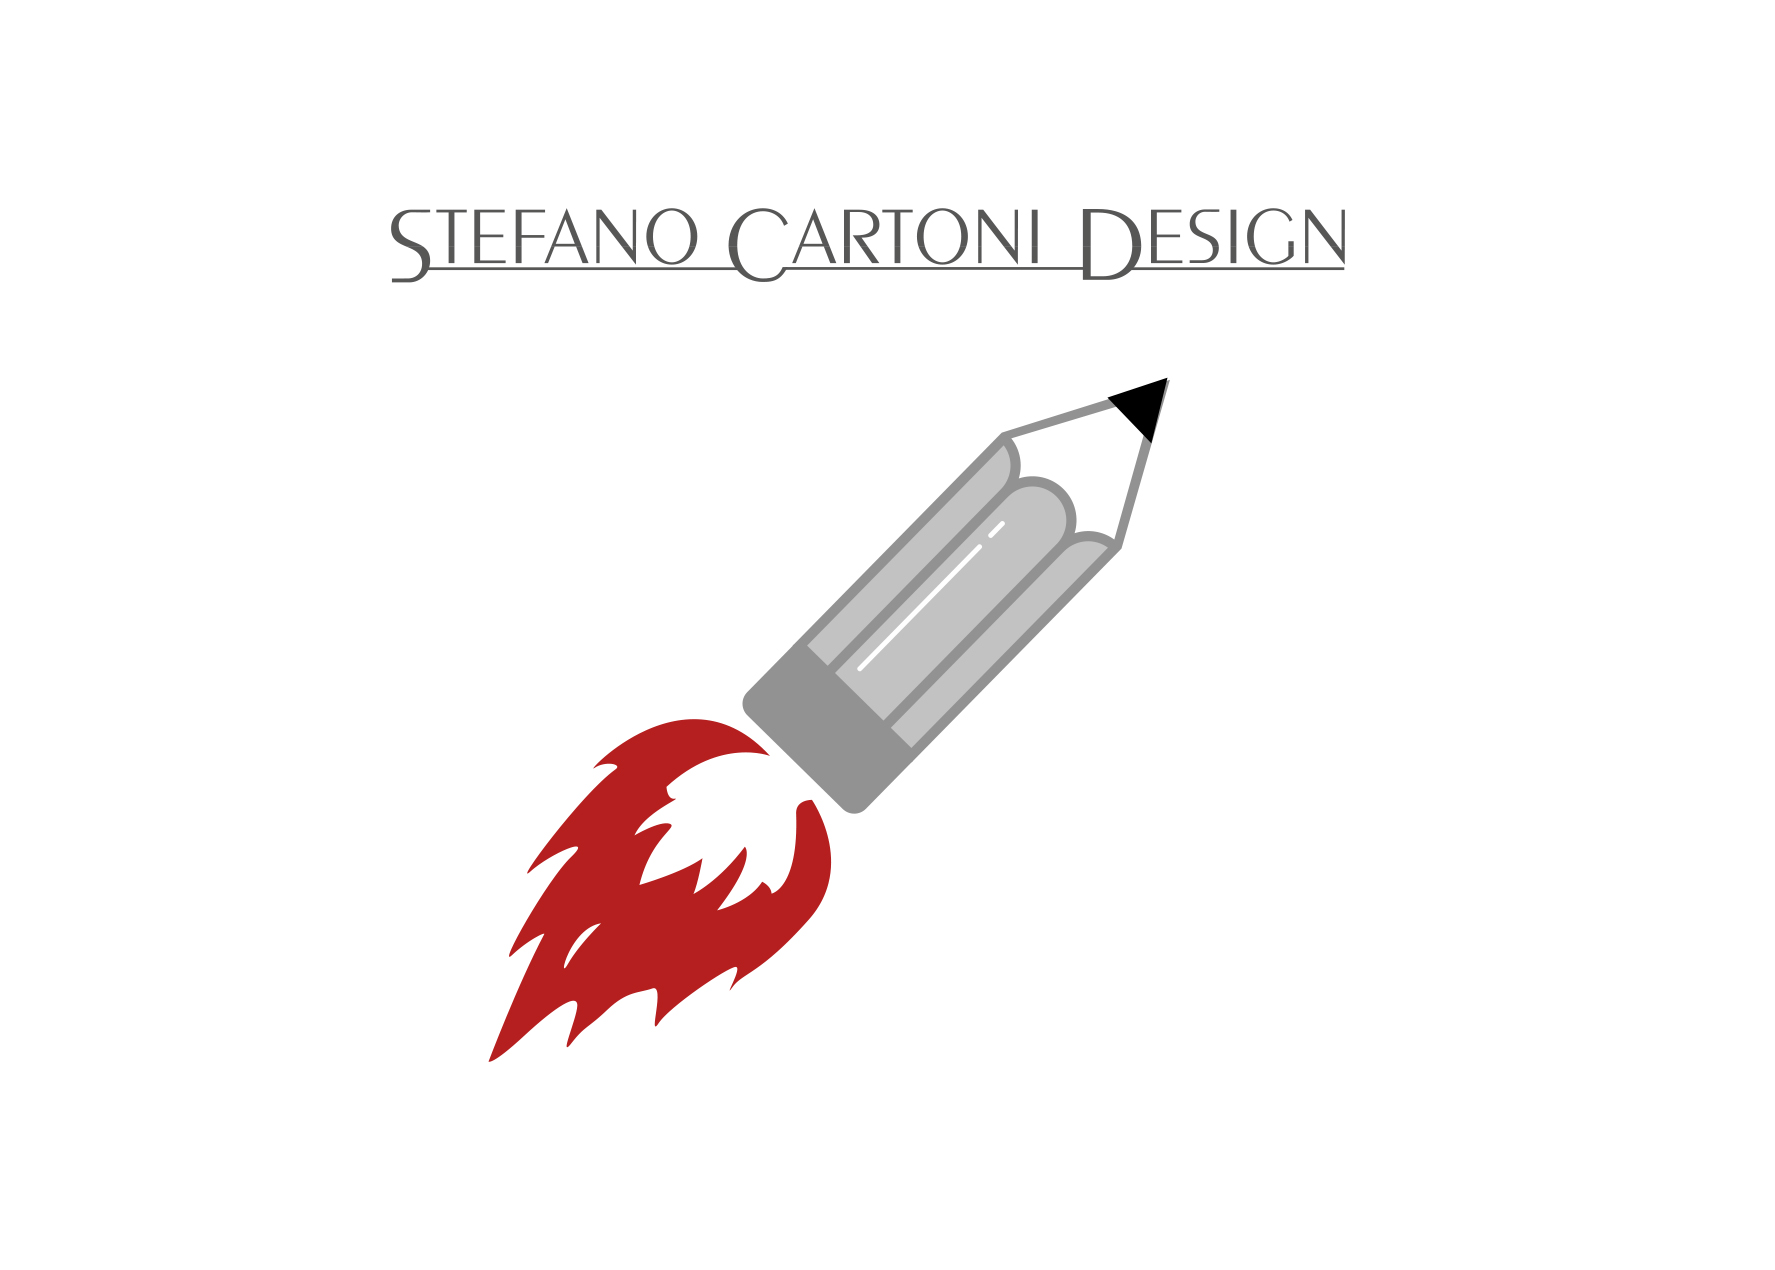 Stefano Cartoni Design